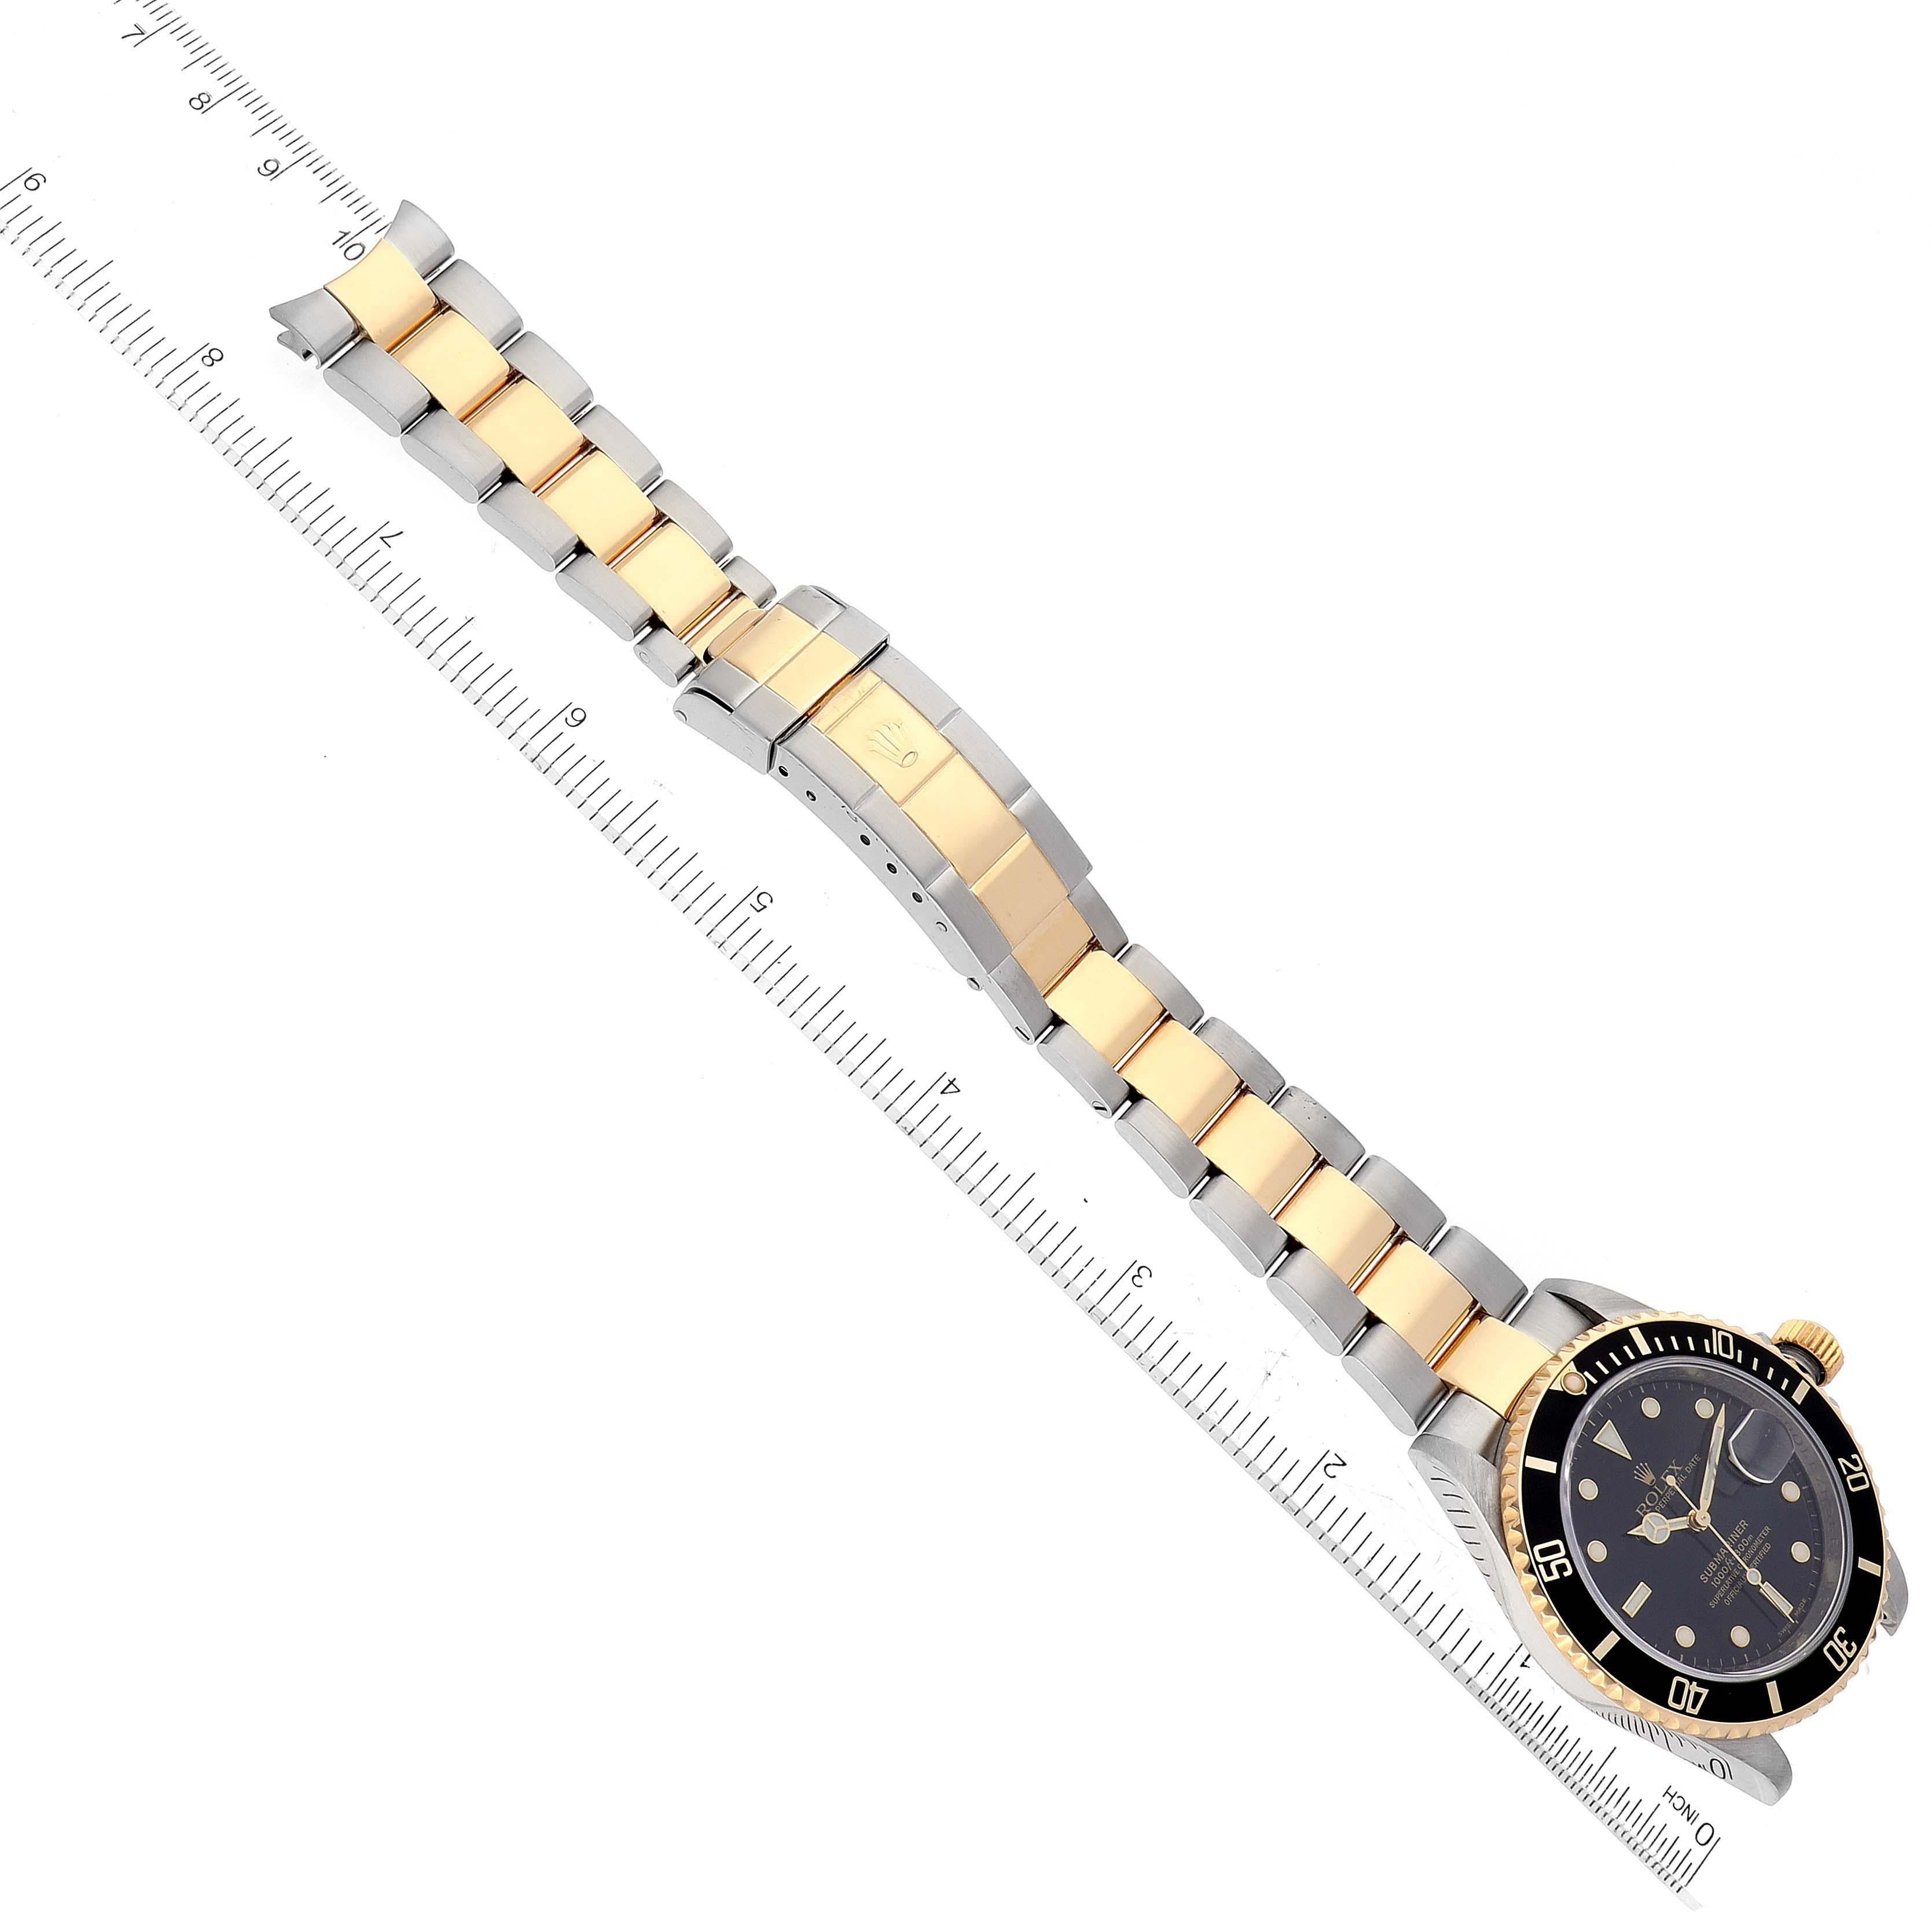 Rolex Submariner Steel Yellow Gold Black Dial Mens Watch 16613 5